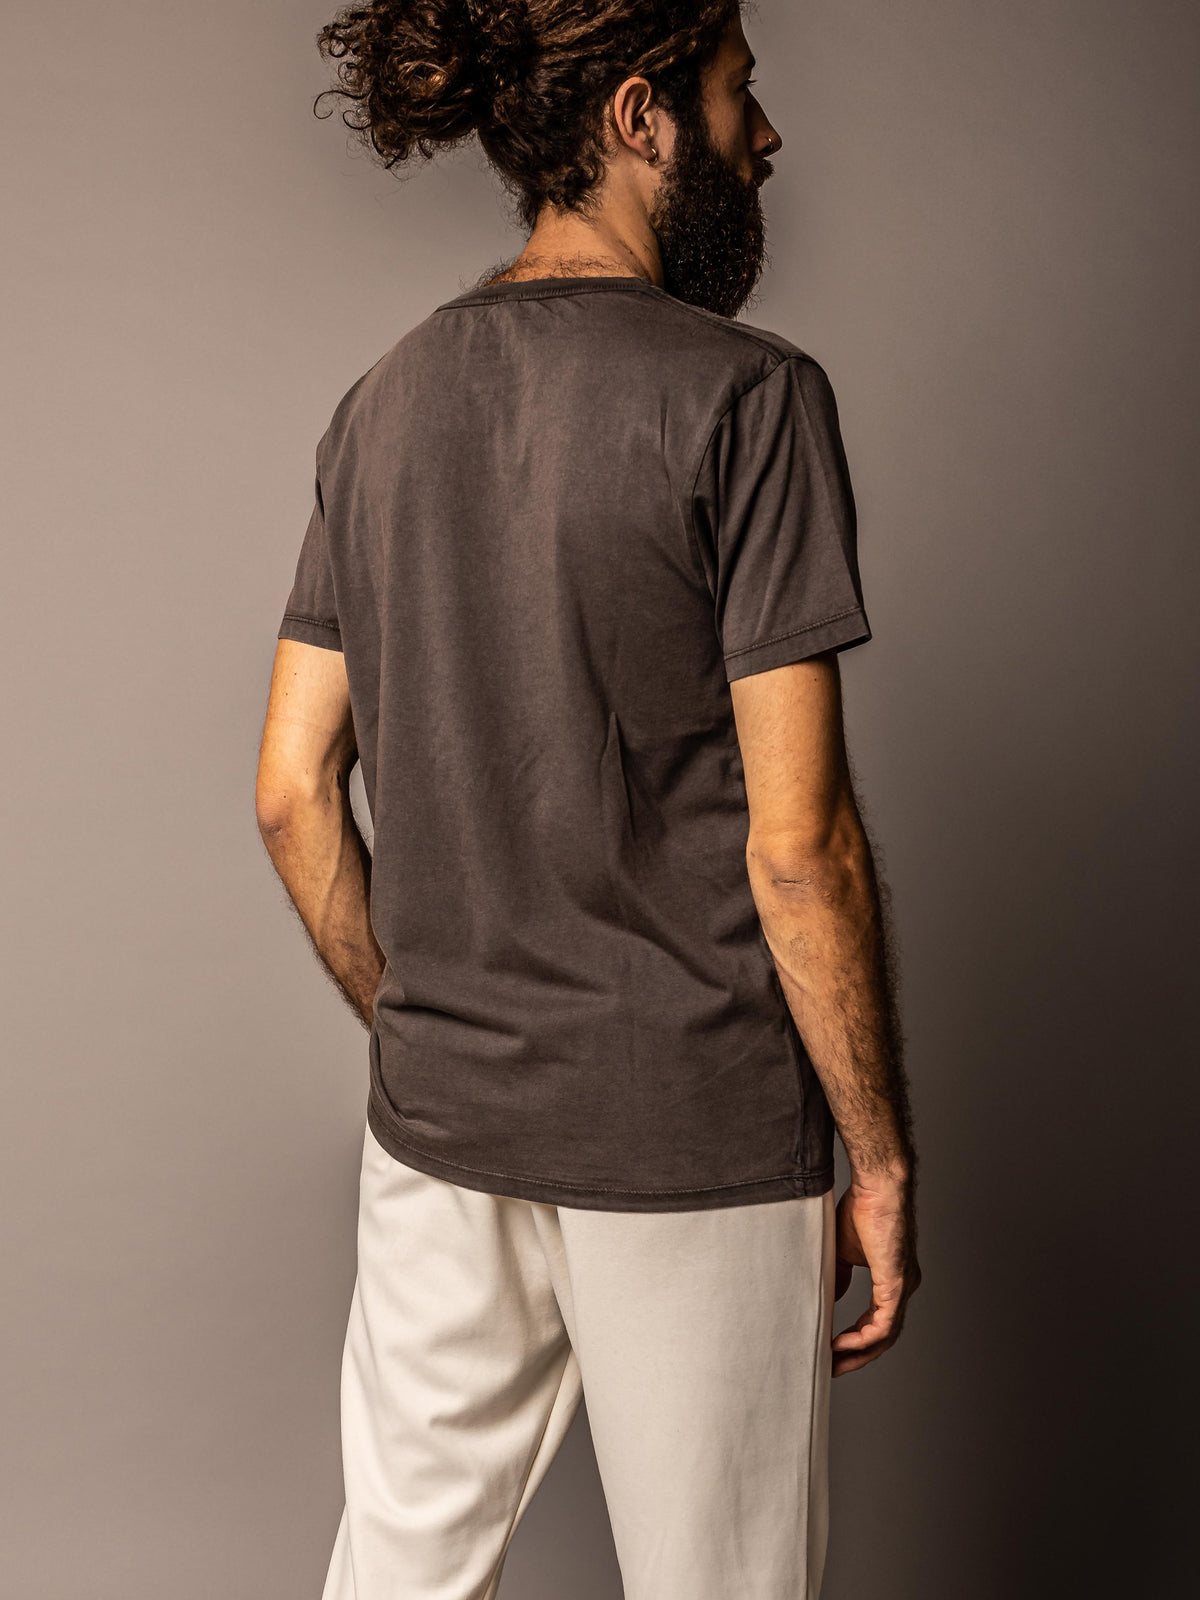 Gray men's t-shirt with Free Brush pattern